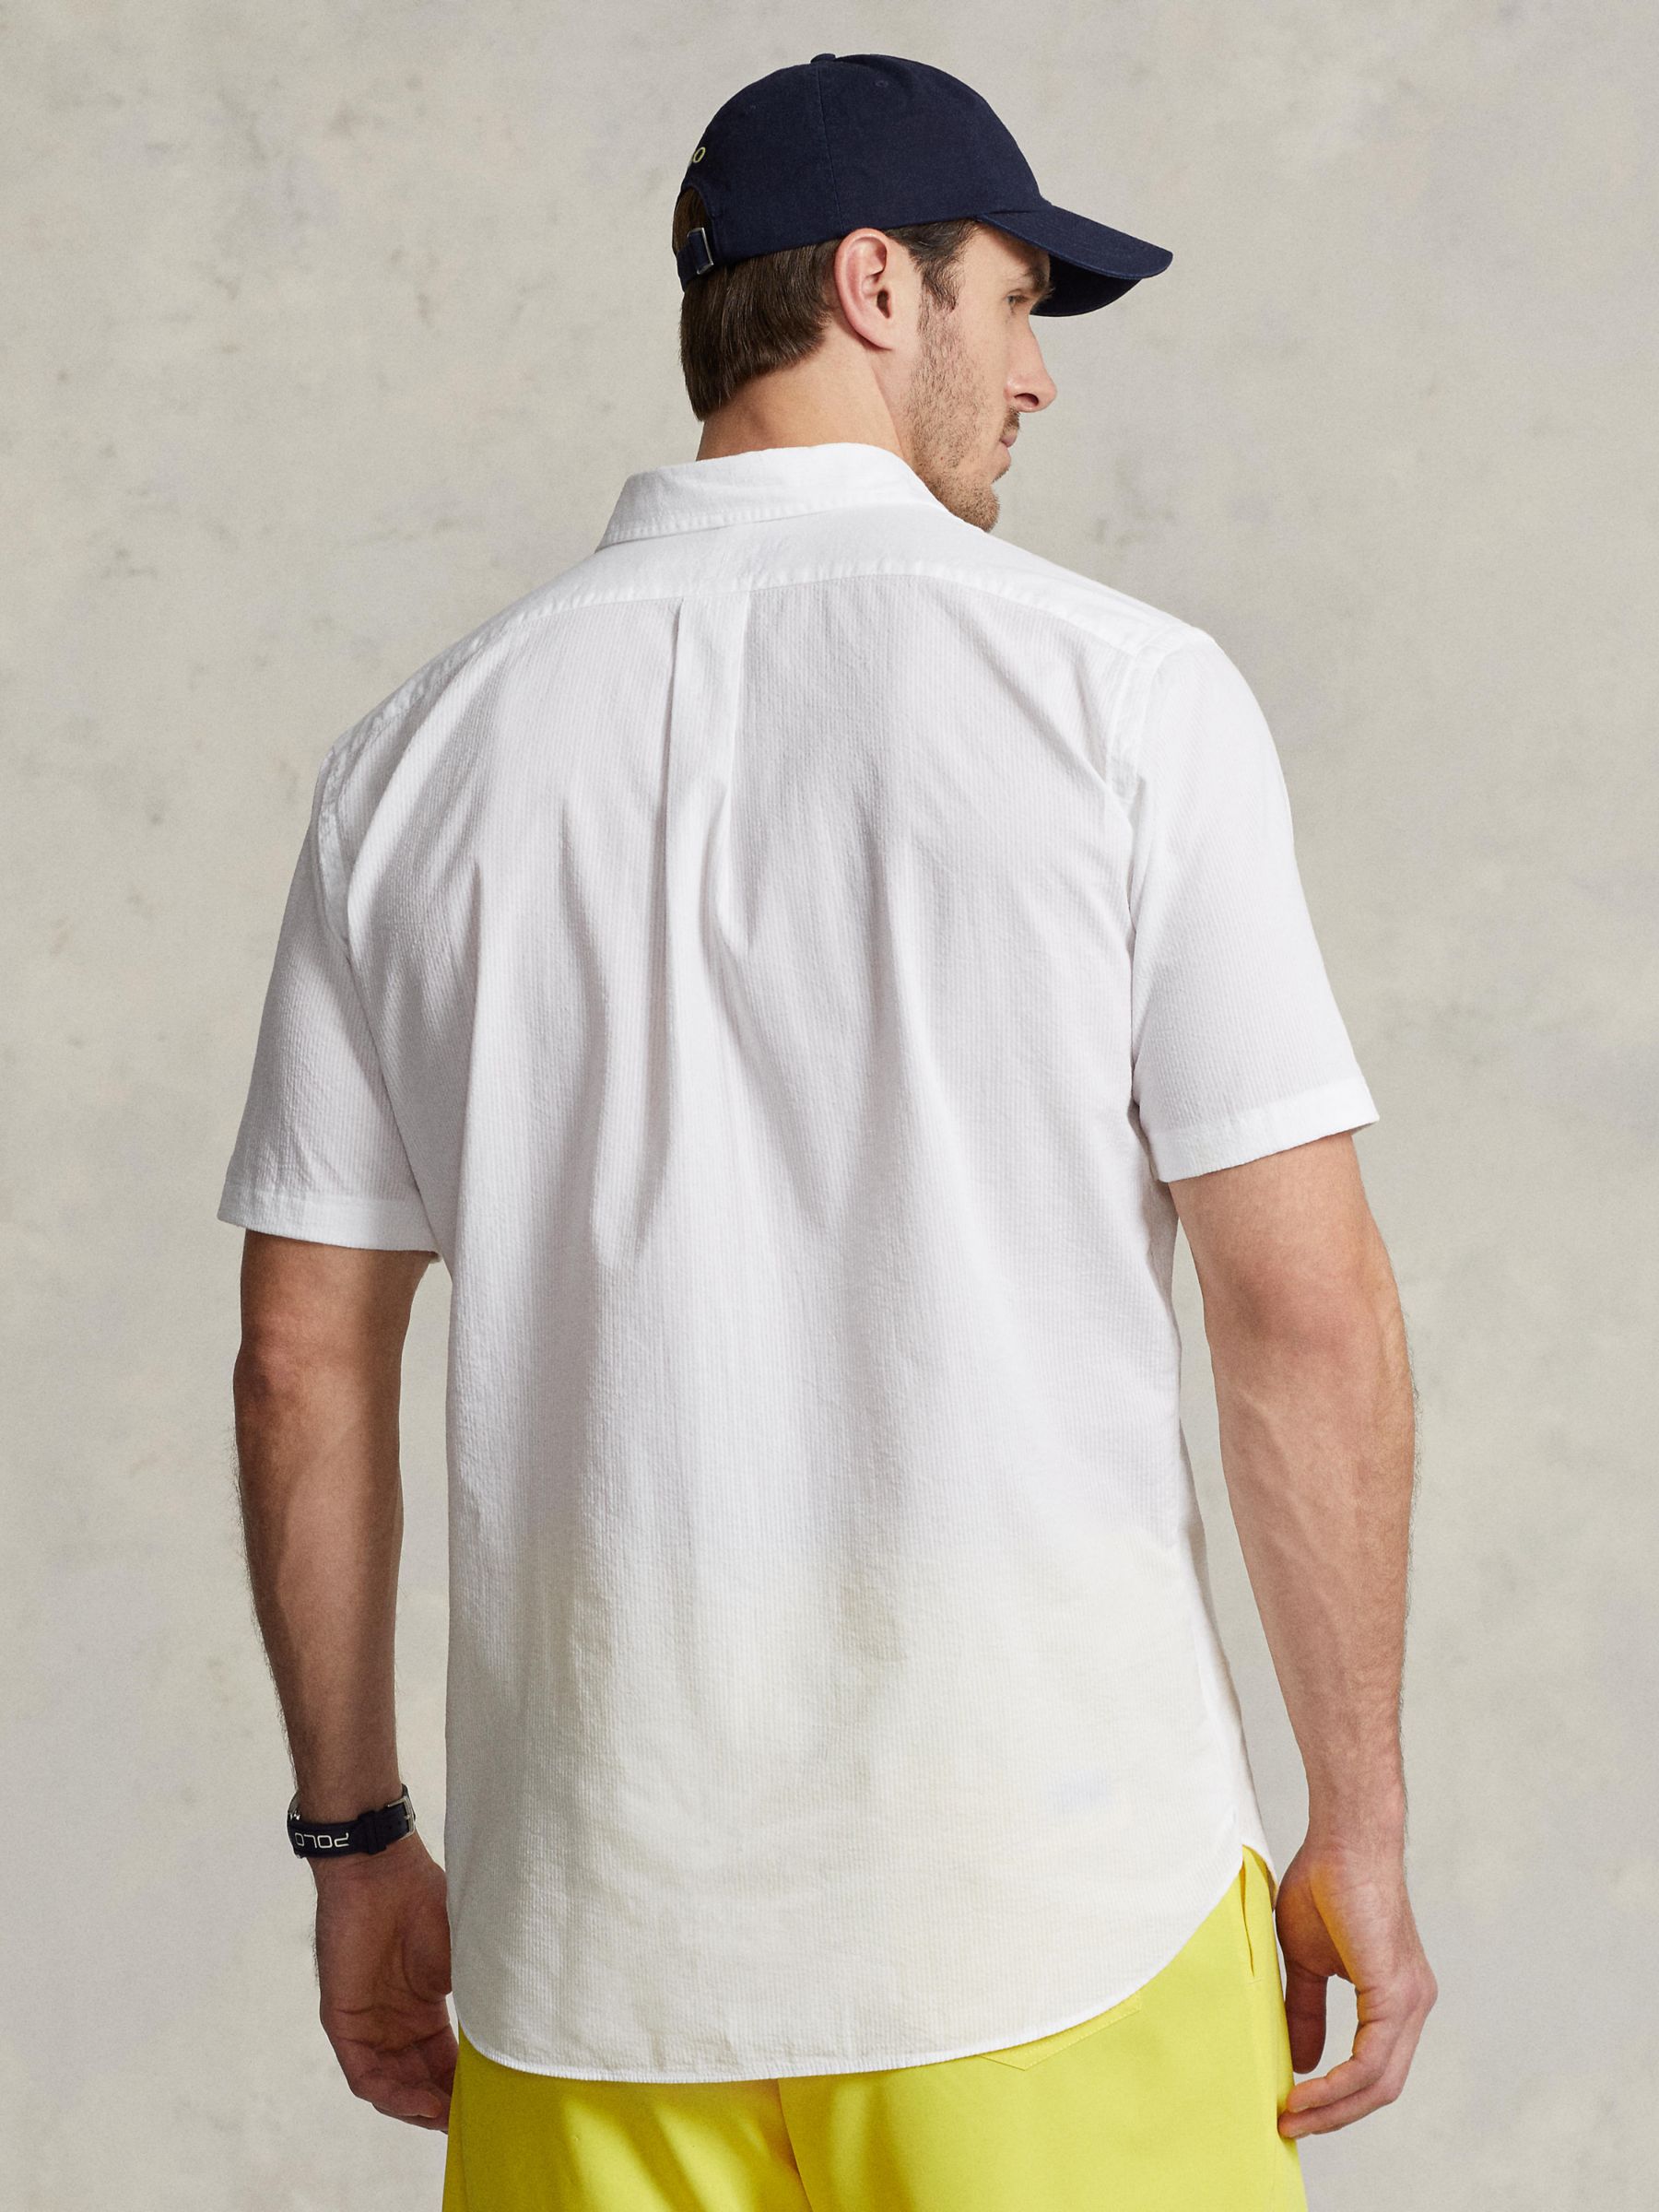 Polo Ralph Lauren Big & Tall Short Sleeved Cotton Shirt, White at John  Lewis & Partners